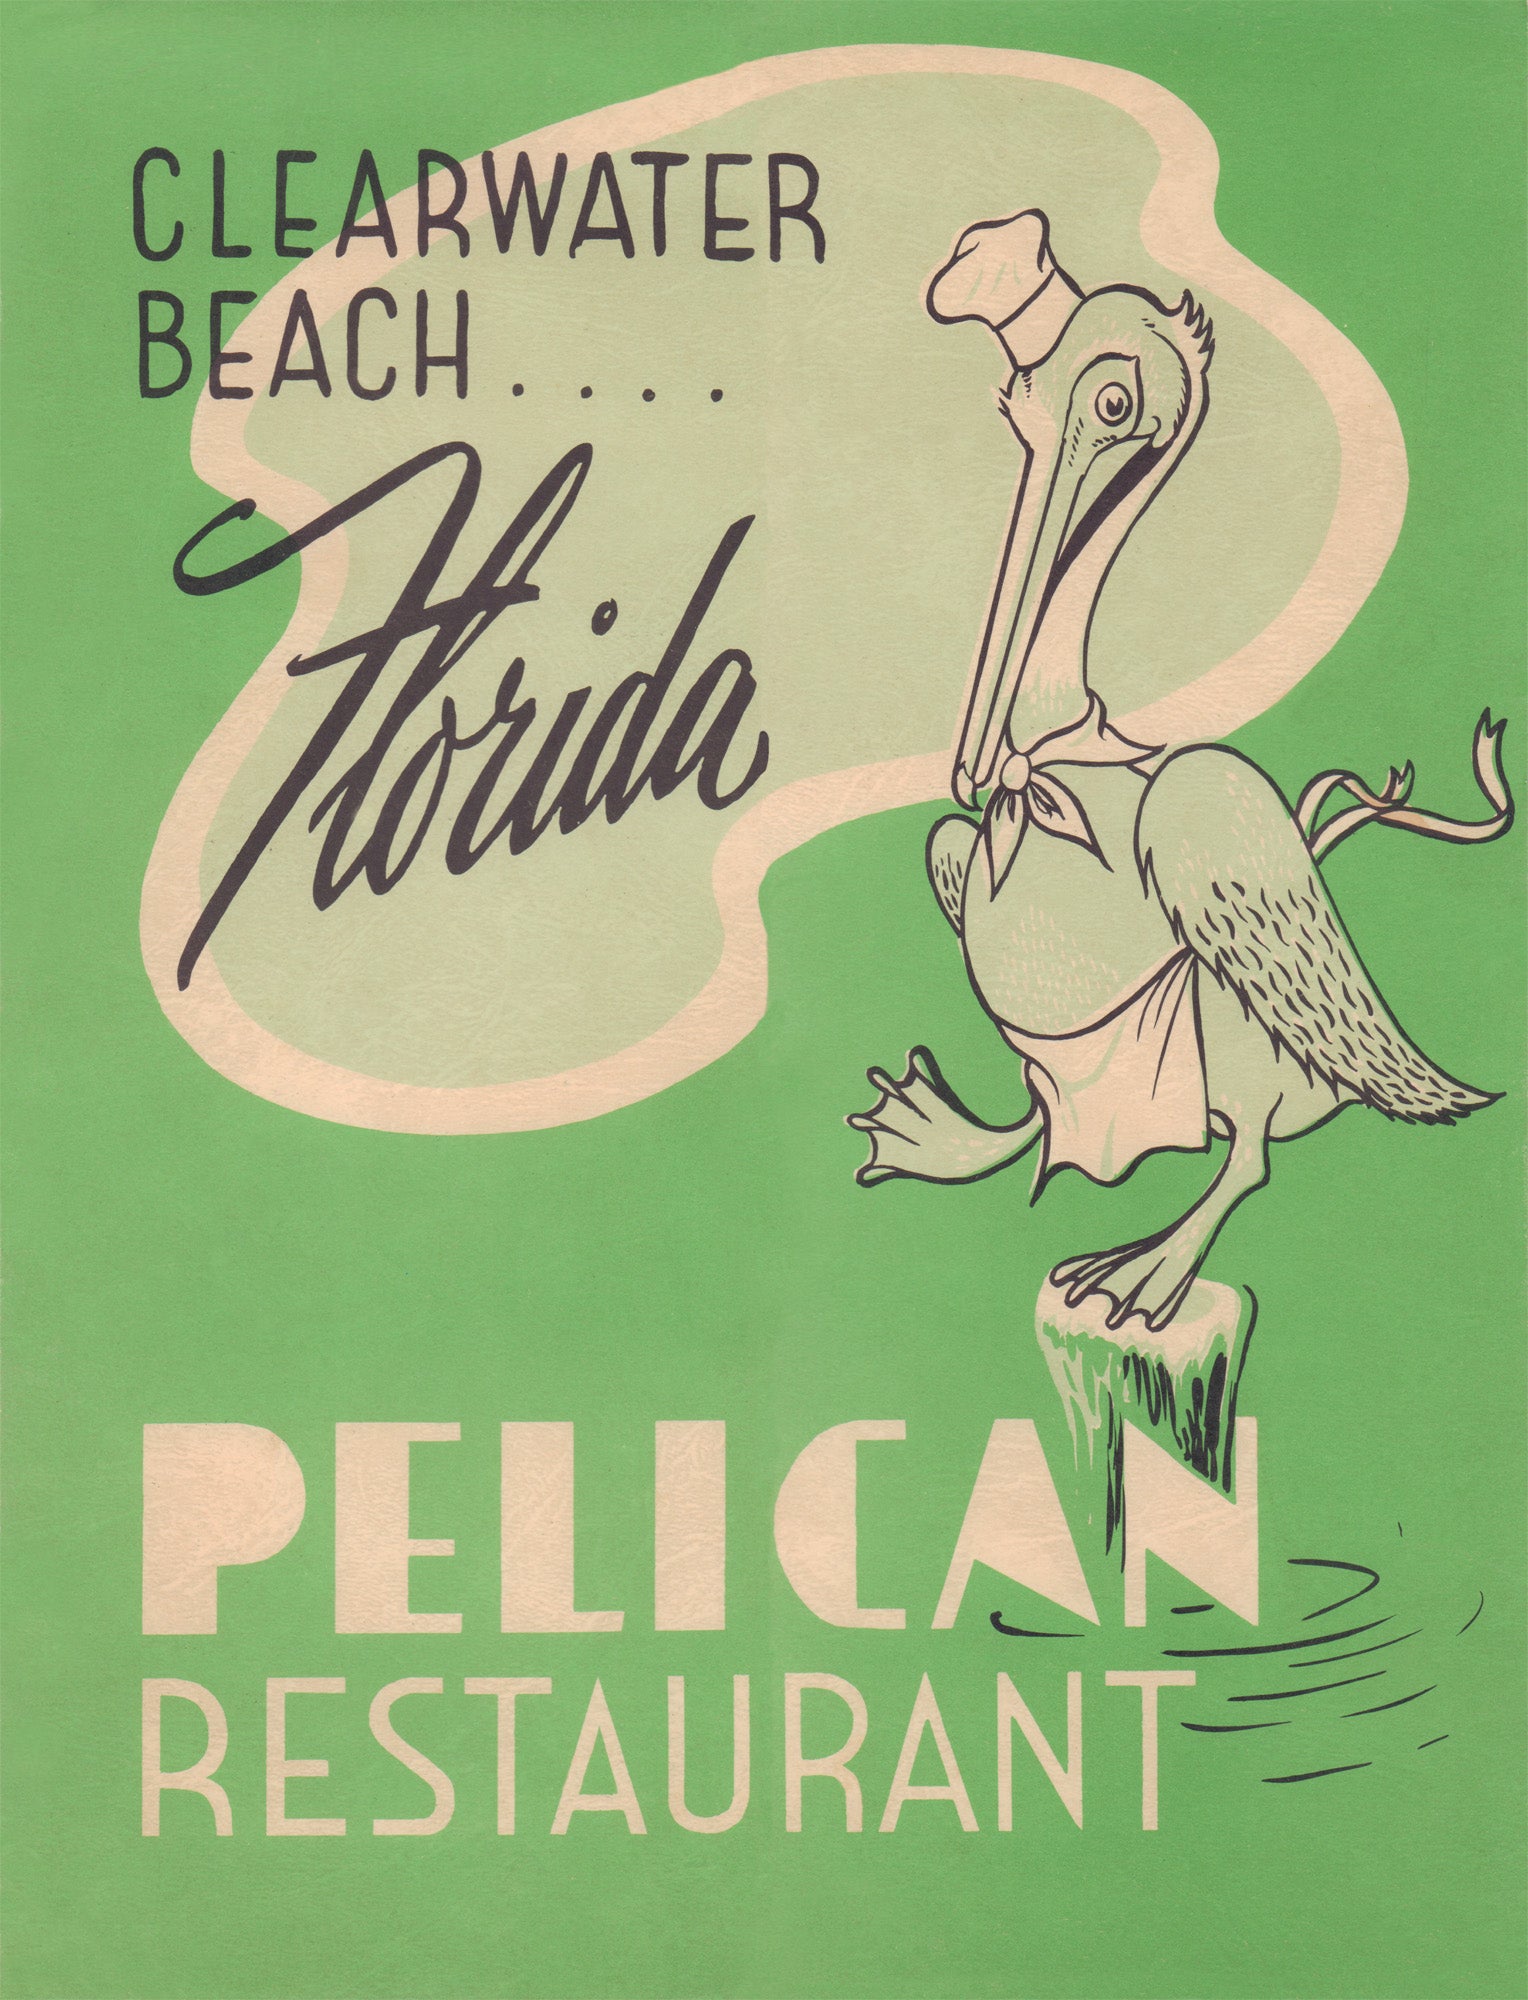 The Pelican, Clearwater Beach 1960s | Vintage Menu Art – cover